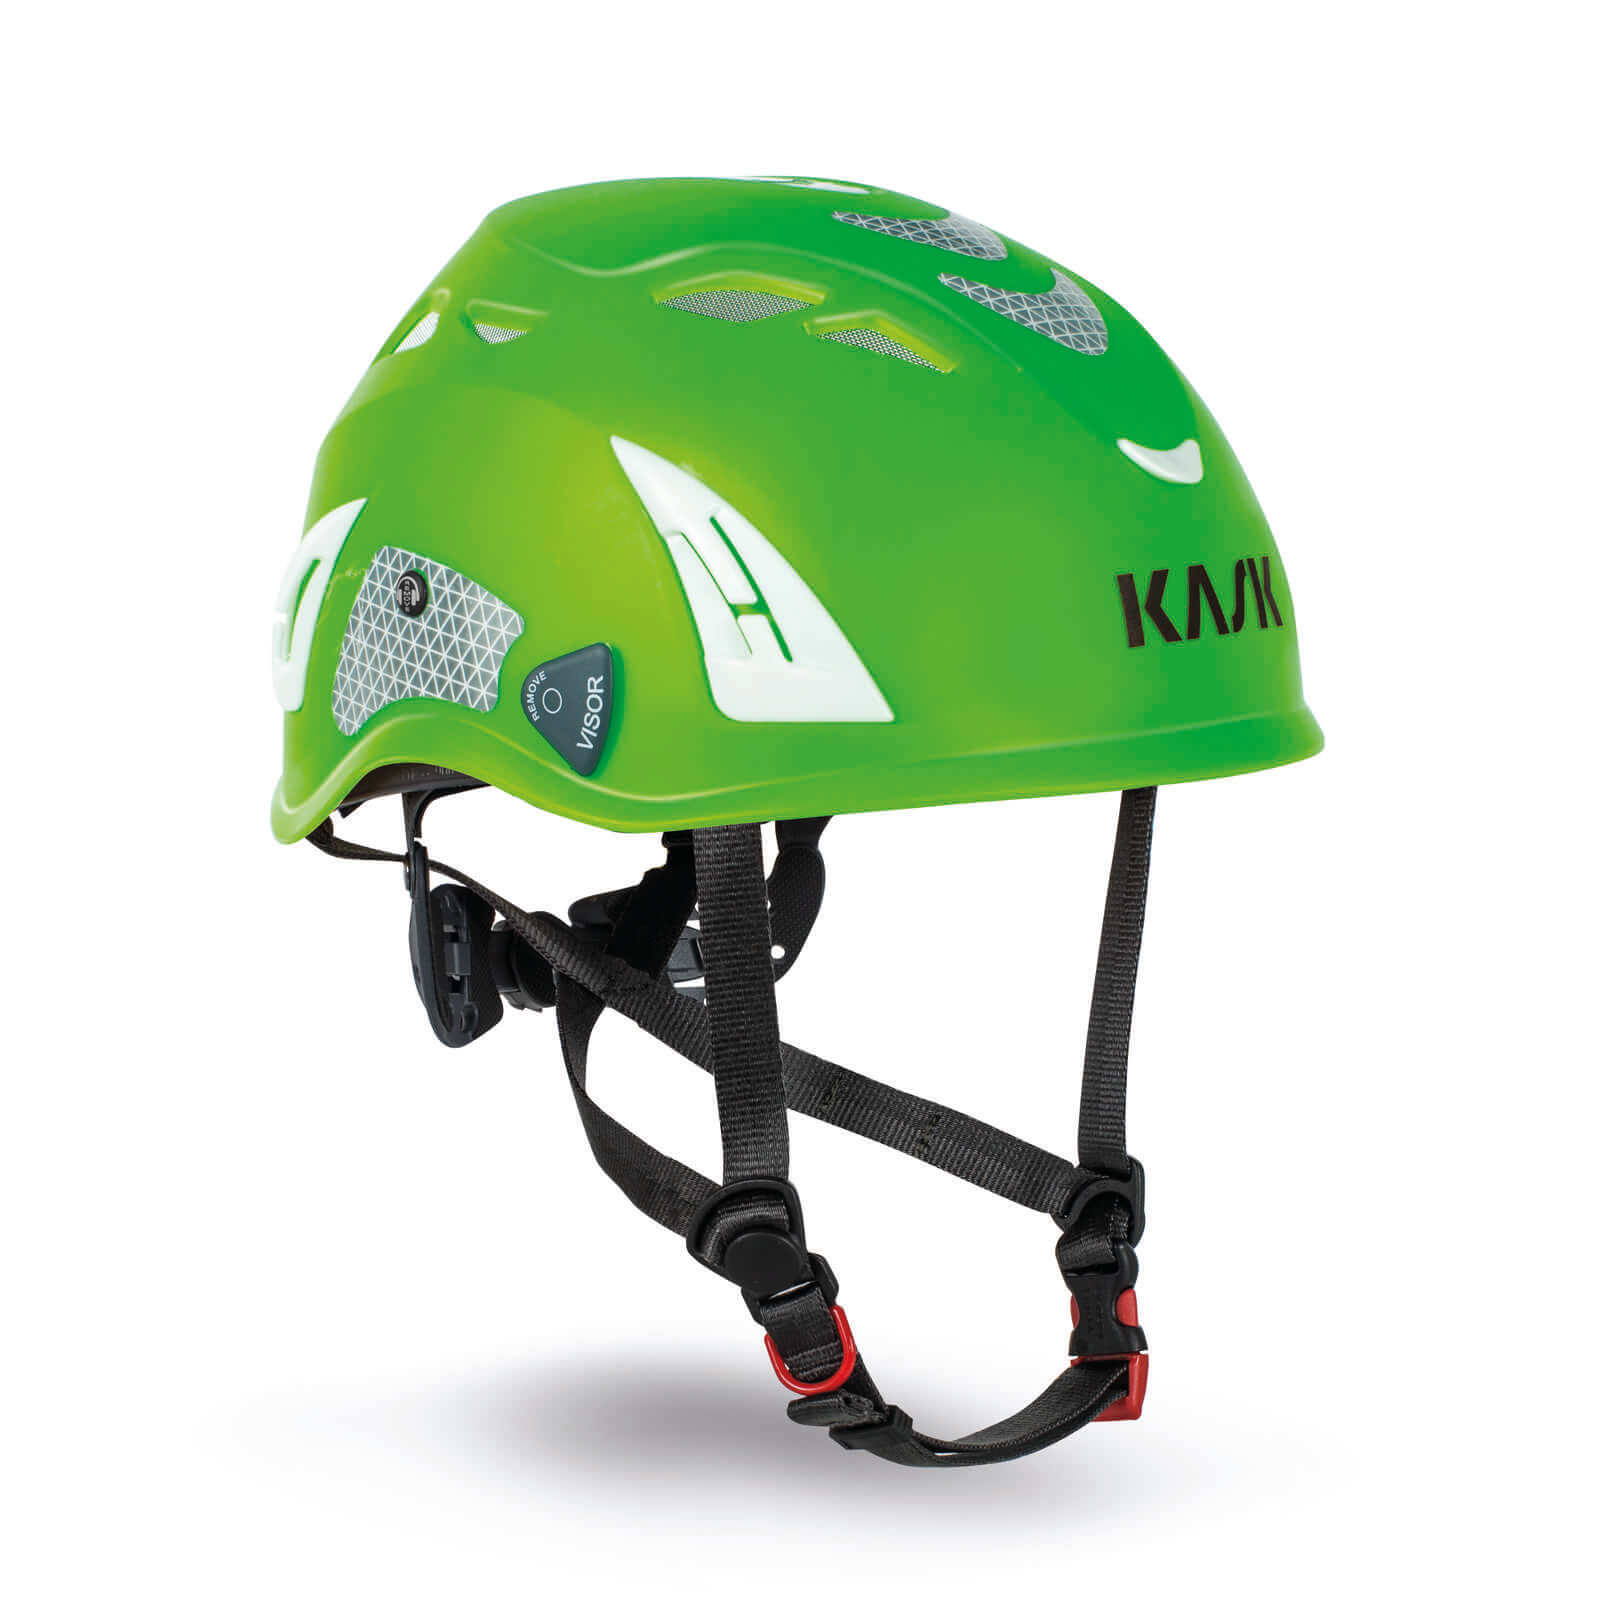 KASK Schutzhelm Superplasma PL Hi Viz - Arbeitsschutzhelm, Bergsteigerhelm, Helm Farbe:lime von KASK